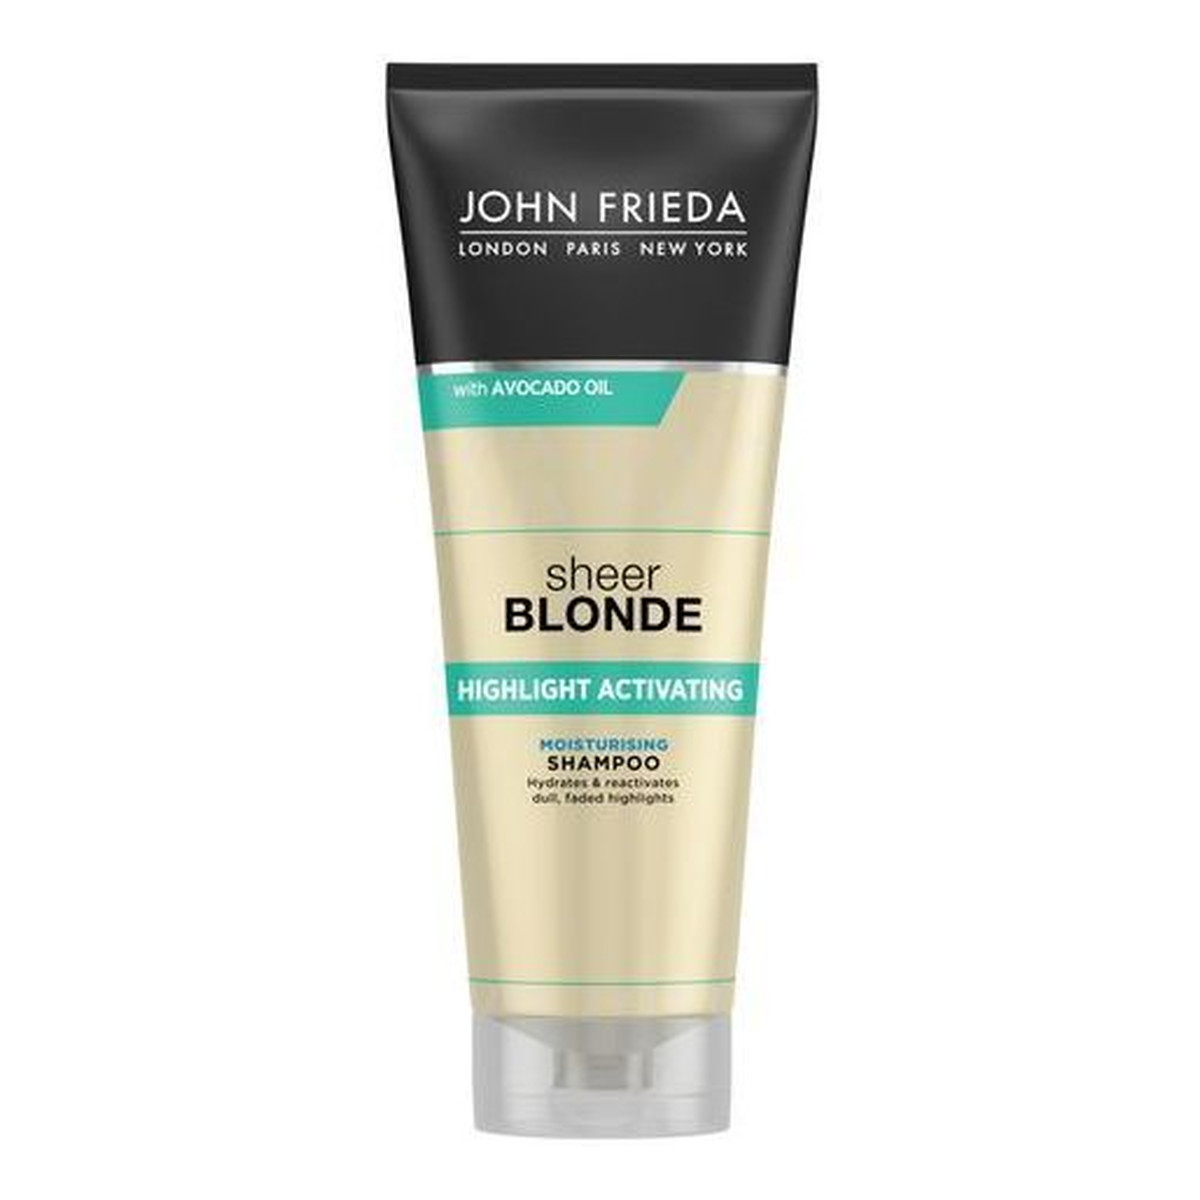 John Frieda Sheer blonde Highlight activating moisturising, szampon nawilżający z olejem z avocado 250ml